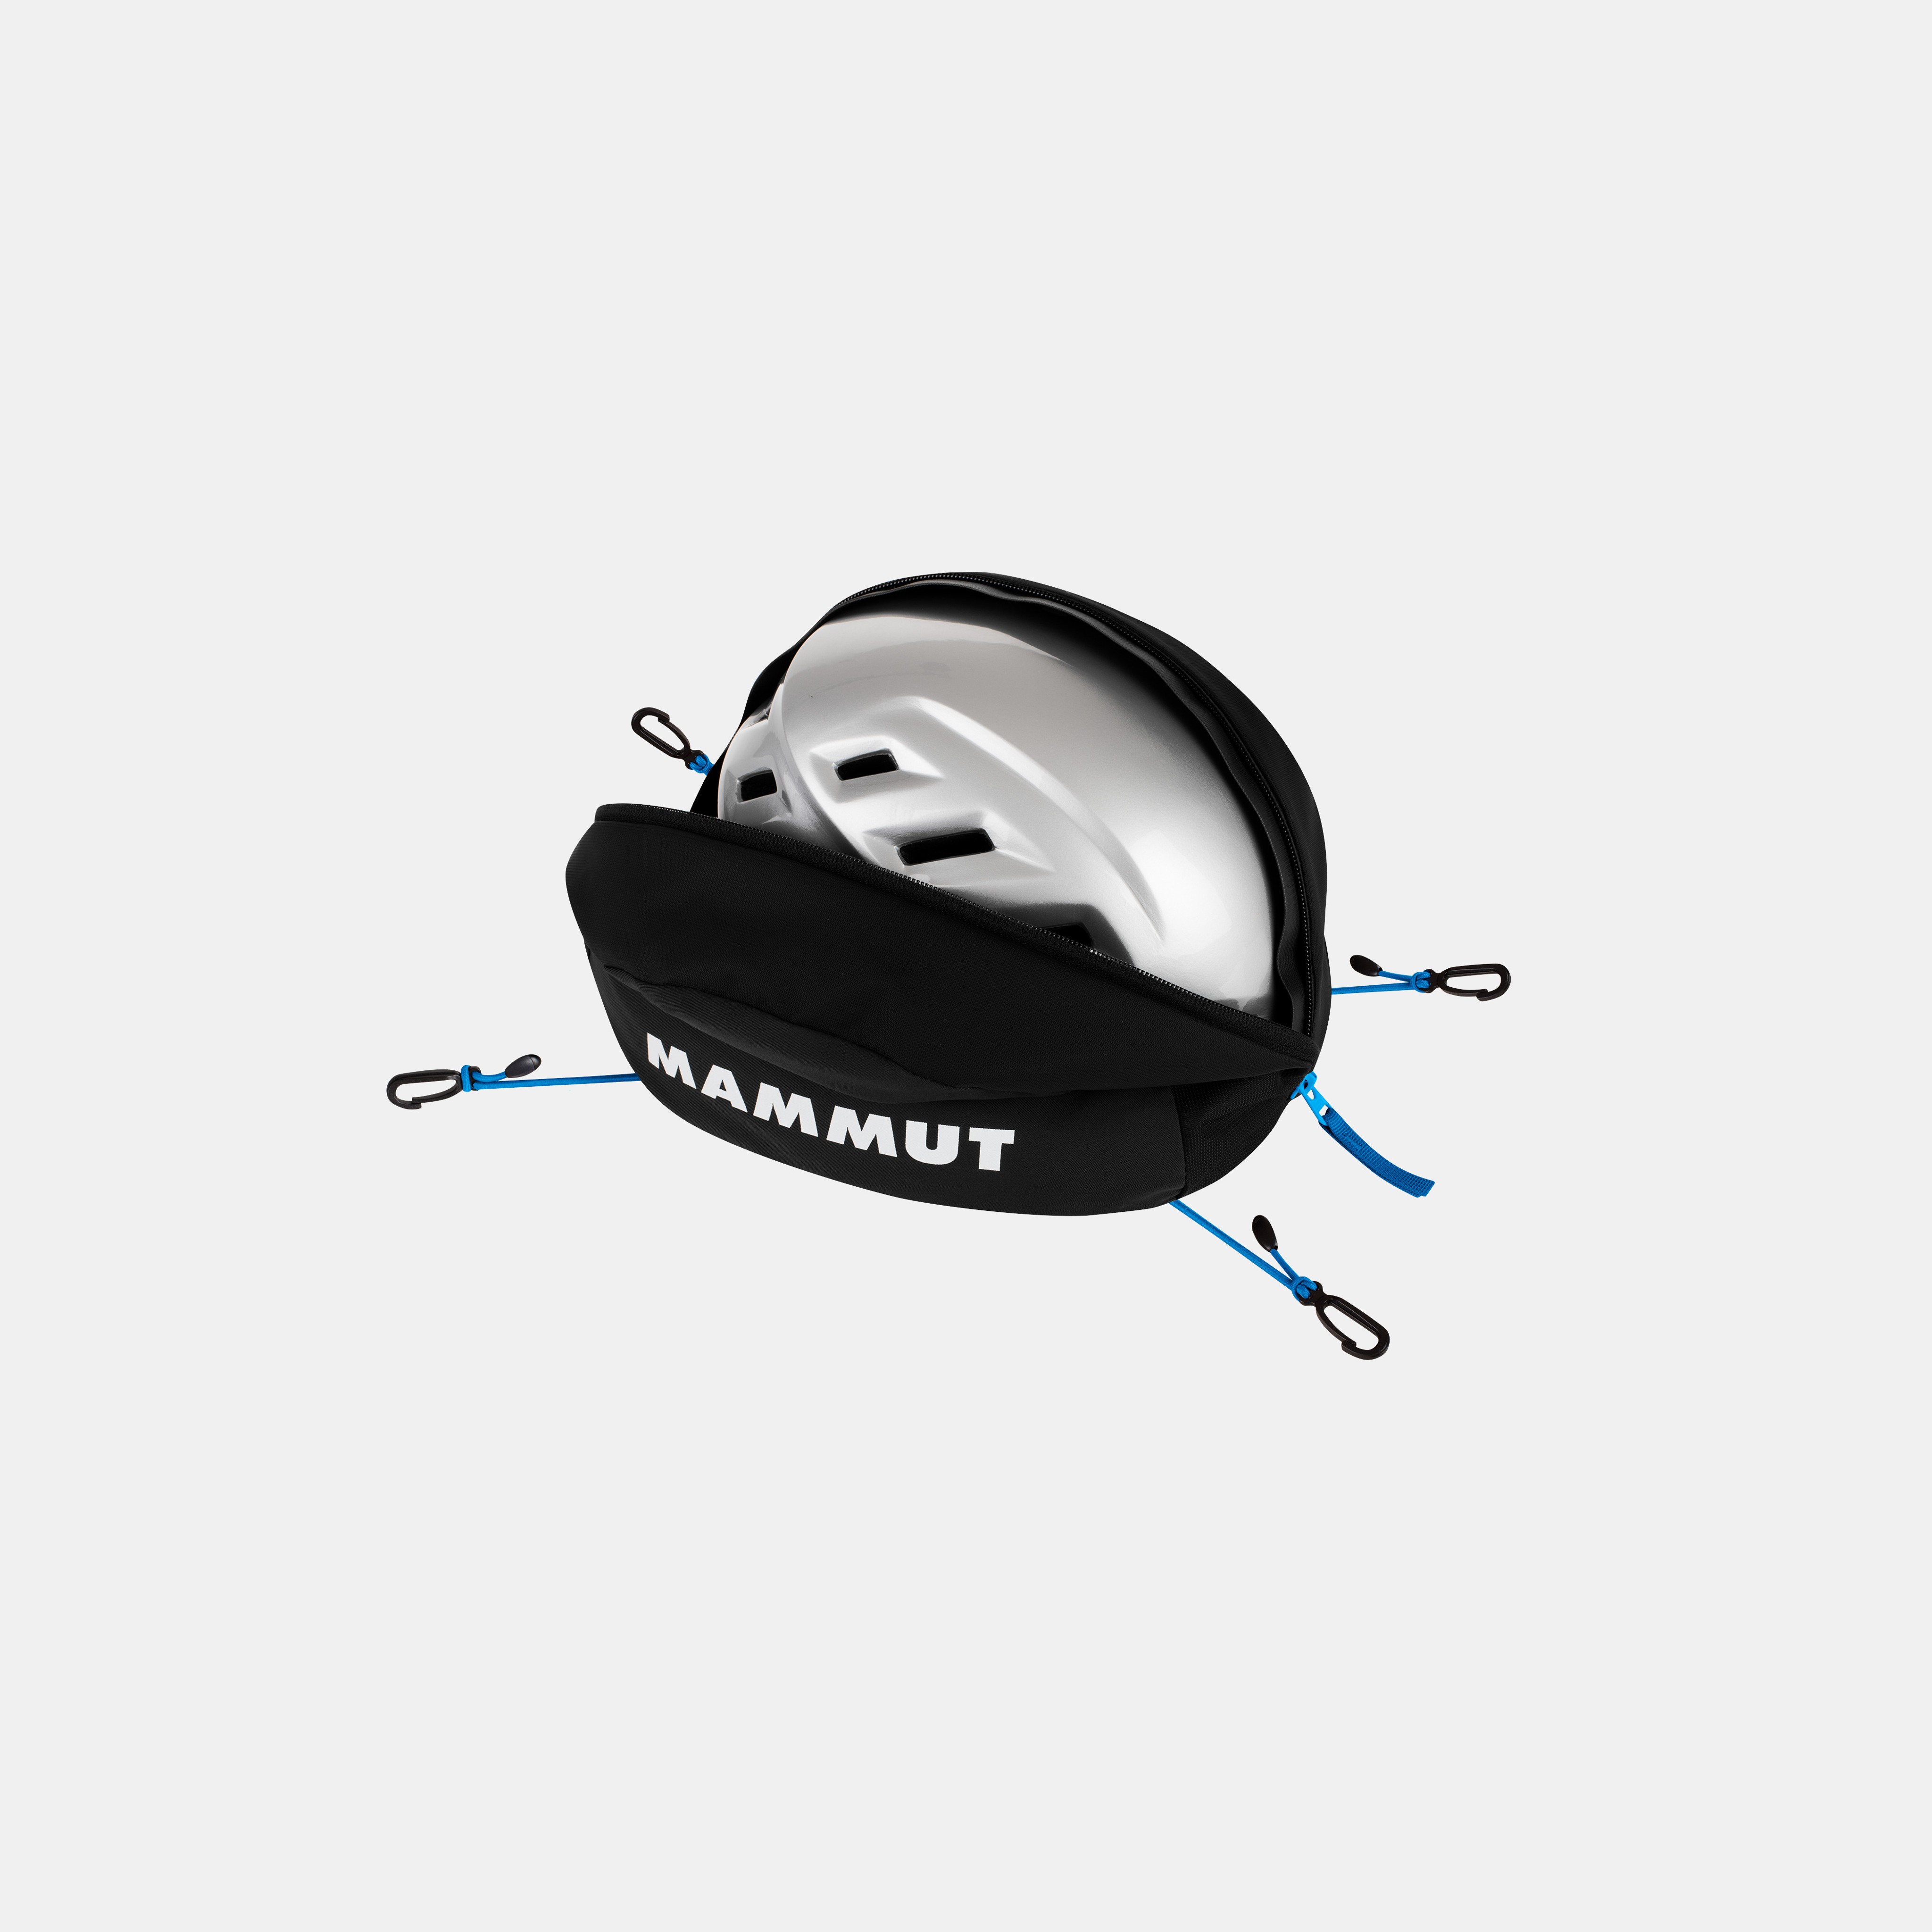 Helmet Holder Pro product image